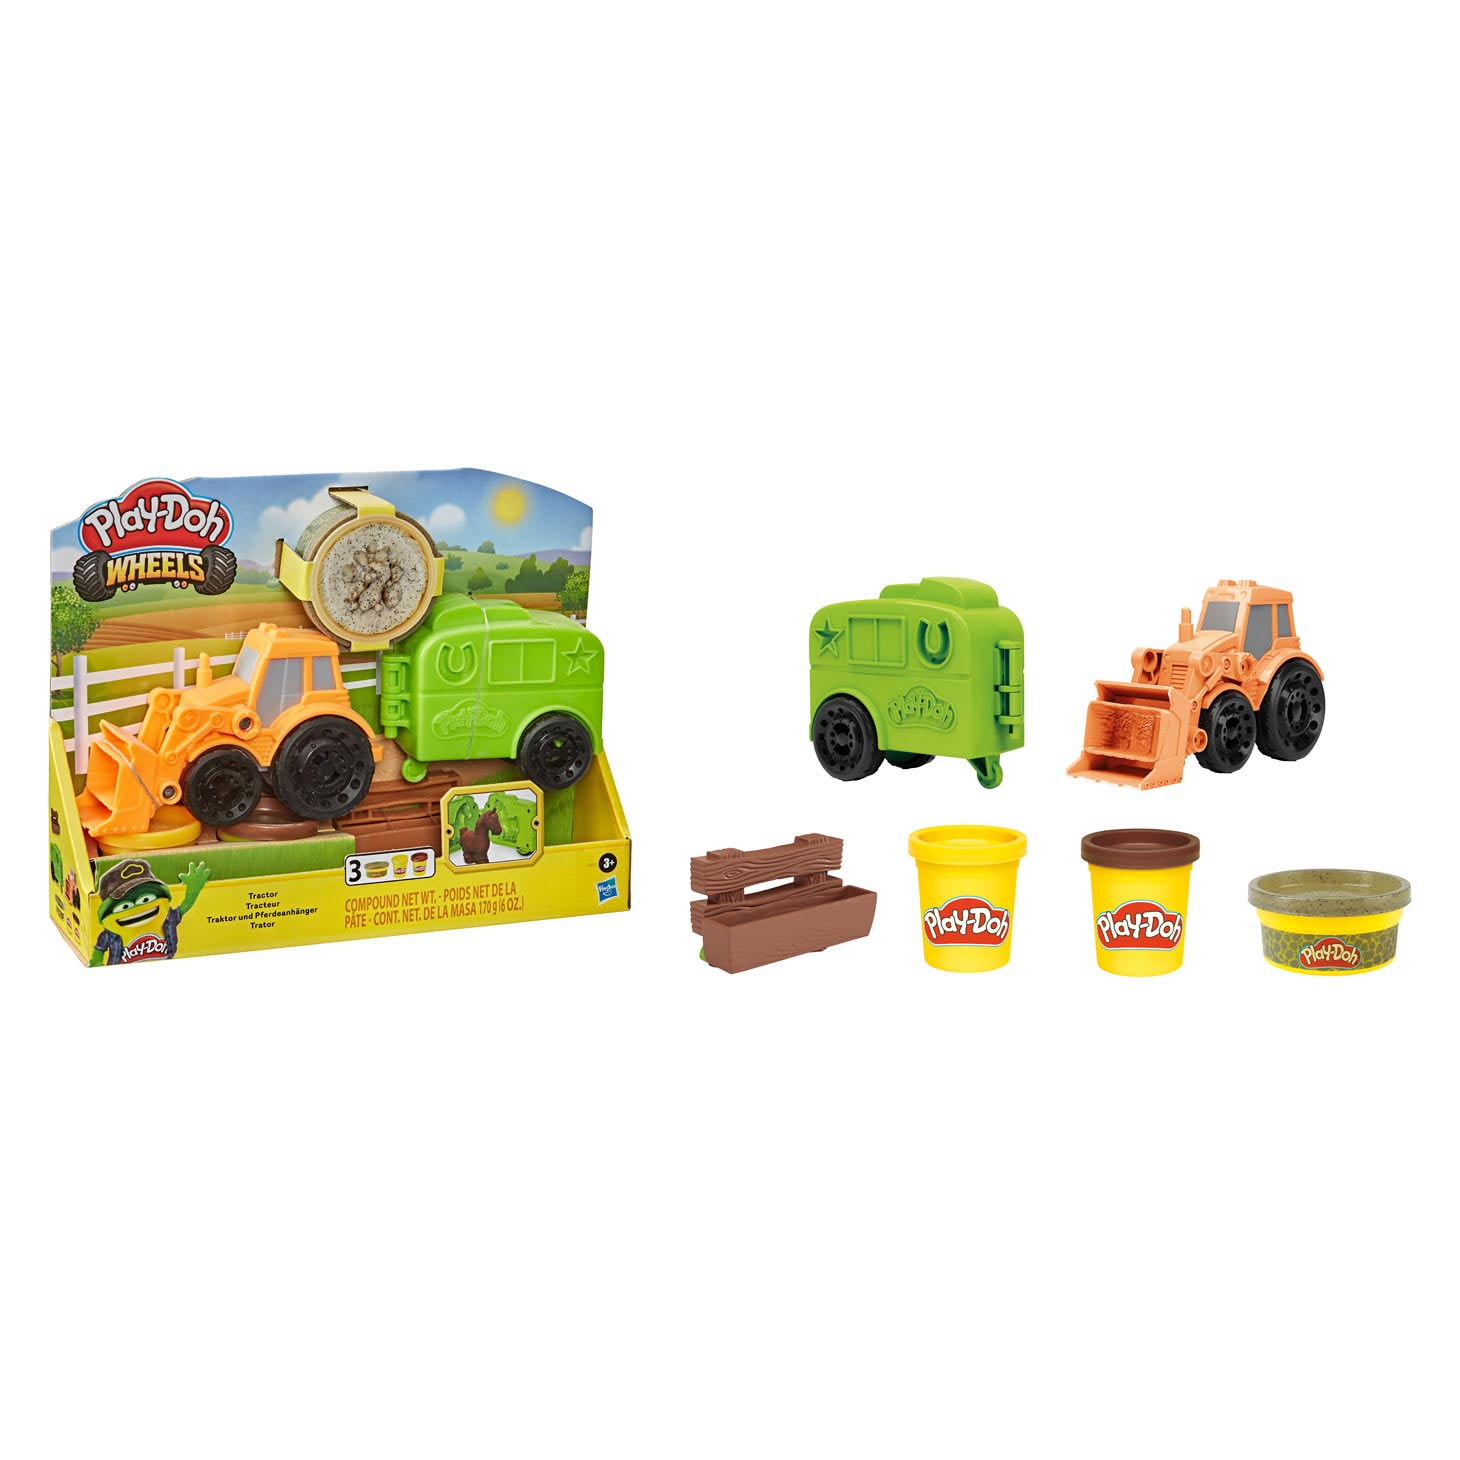 Traktor mit Play-Doh Rädern